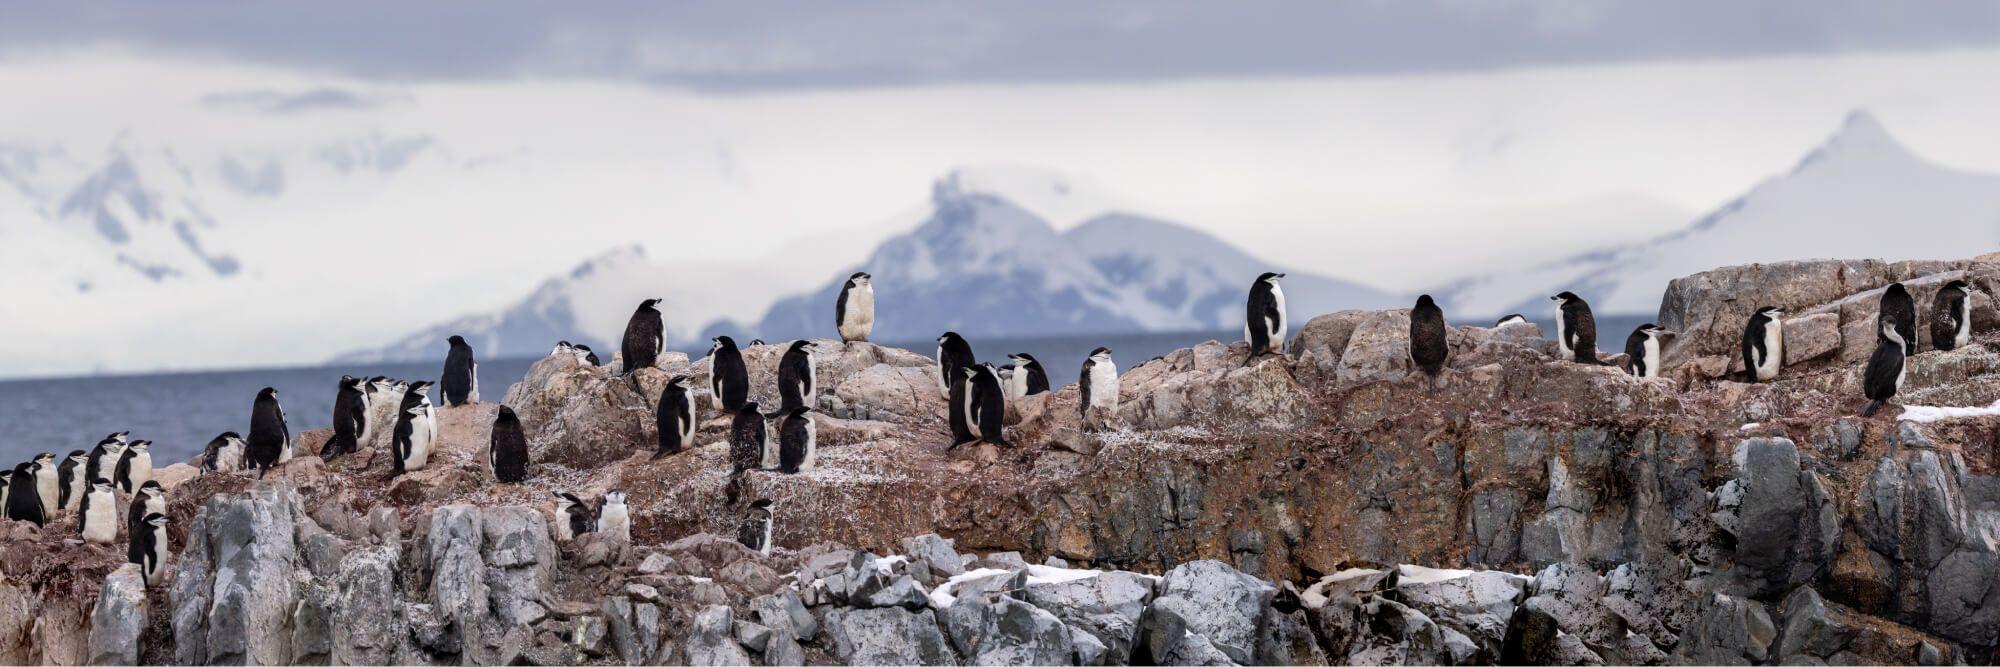 An Antarctic colony.  Photographer: Artem Shestakov. Location: Antarctica.